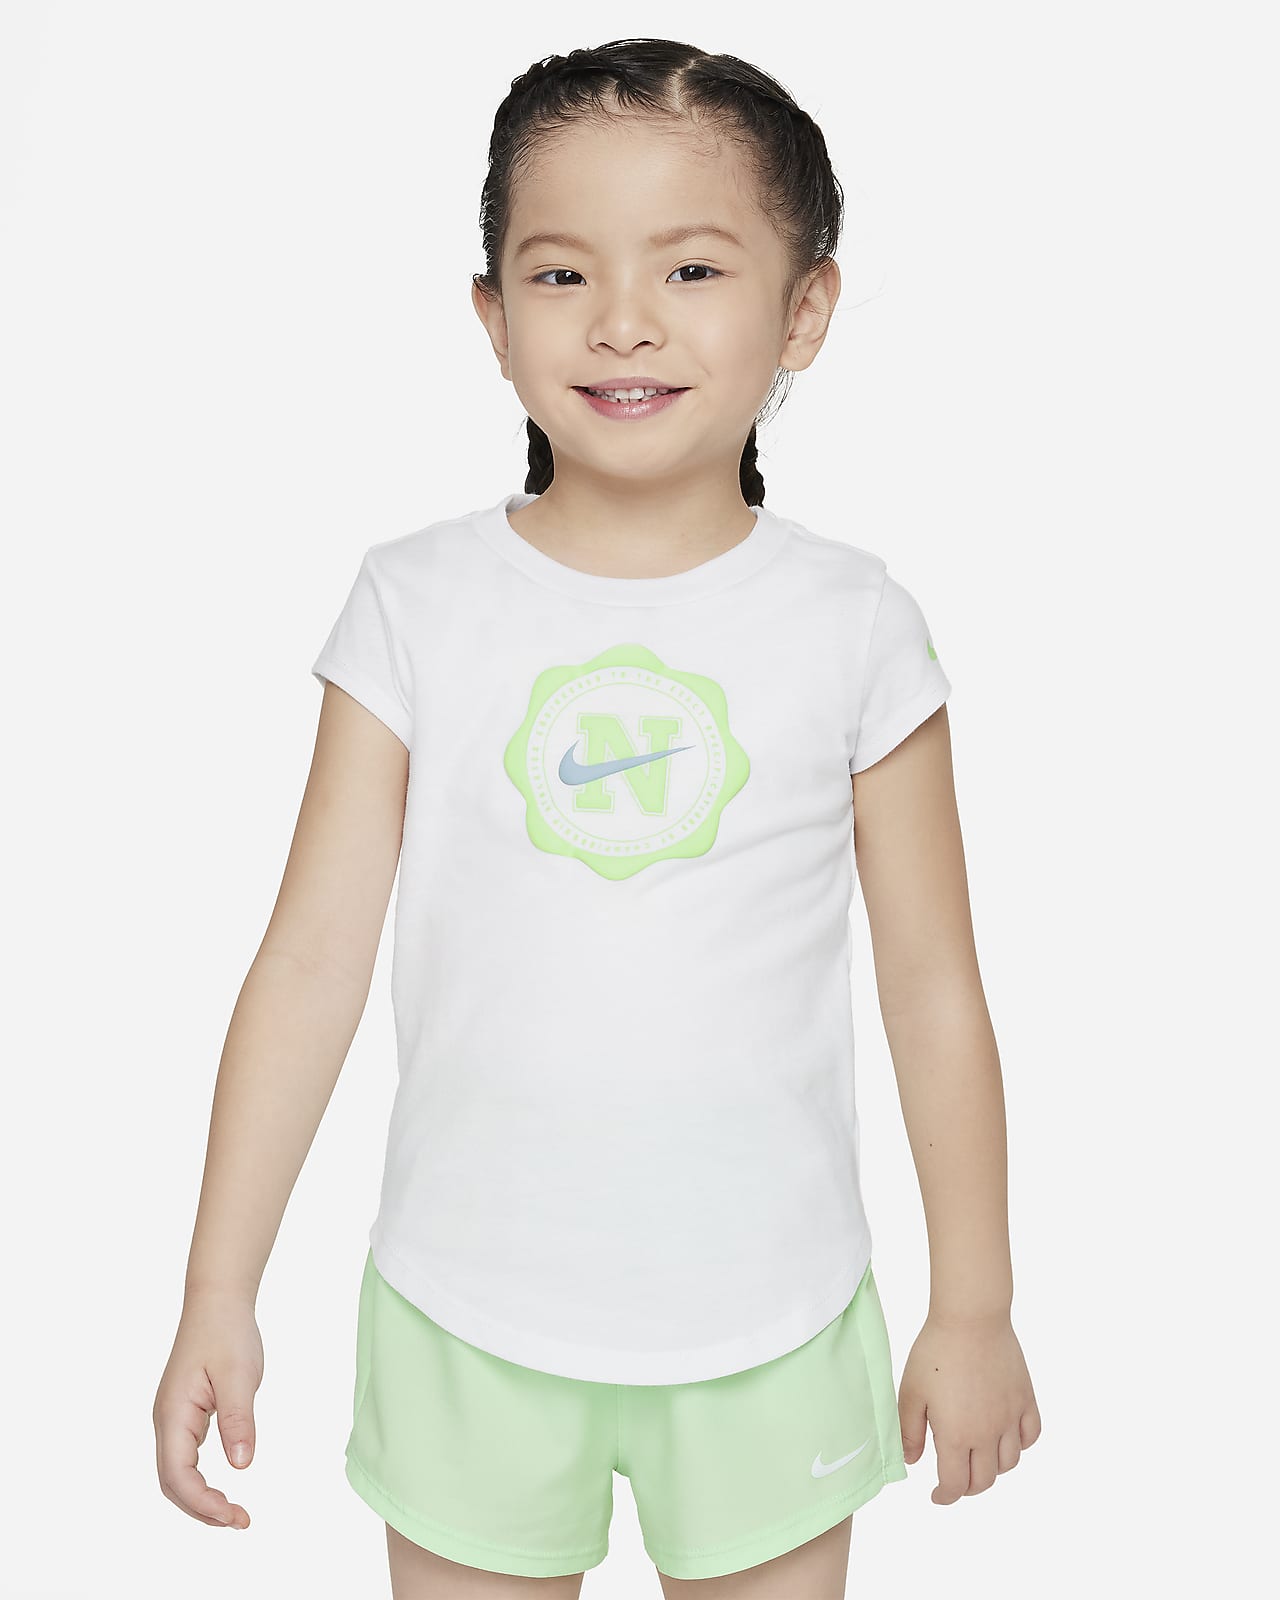 T-shirt Nike Prep in Your Step med tryck för små barn